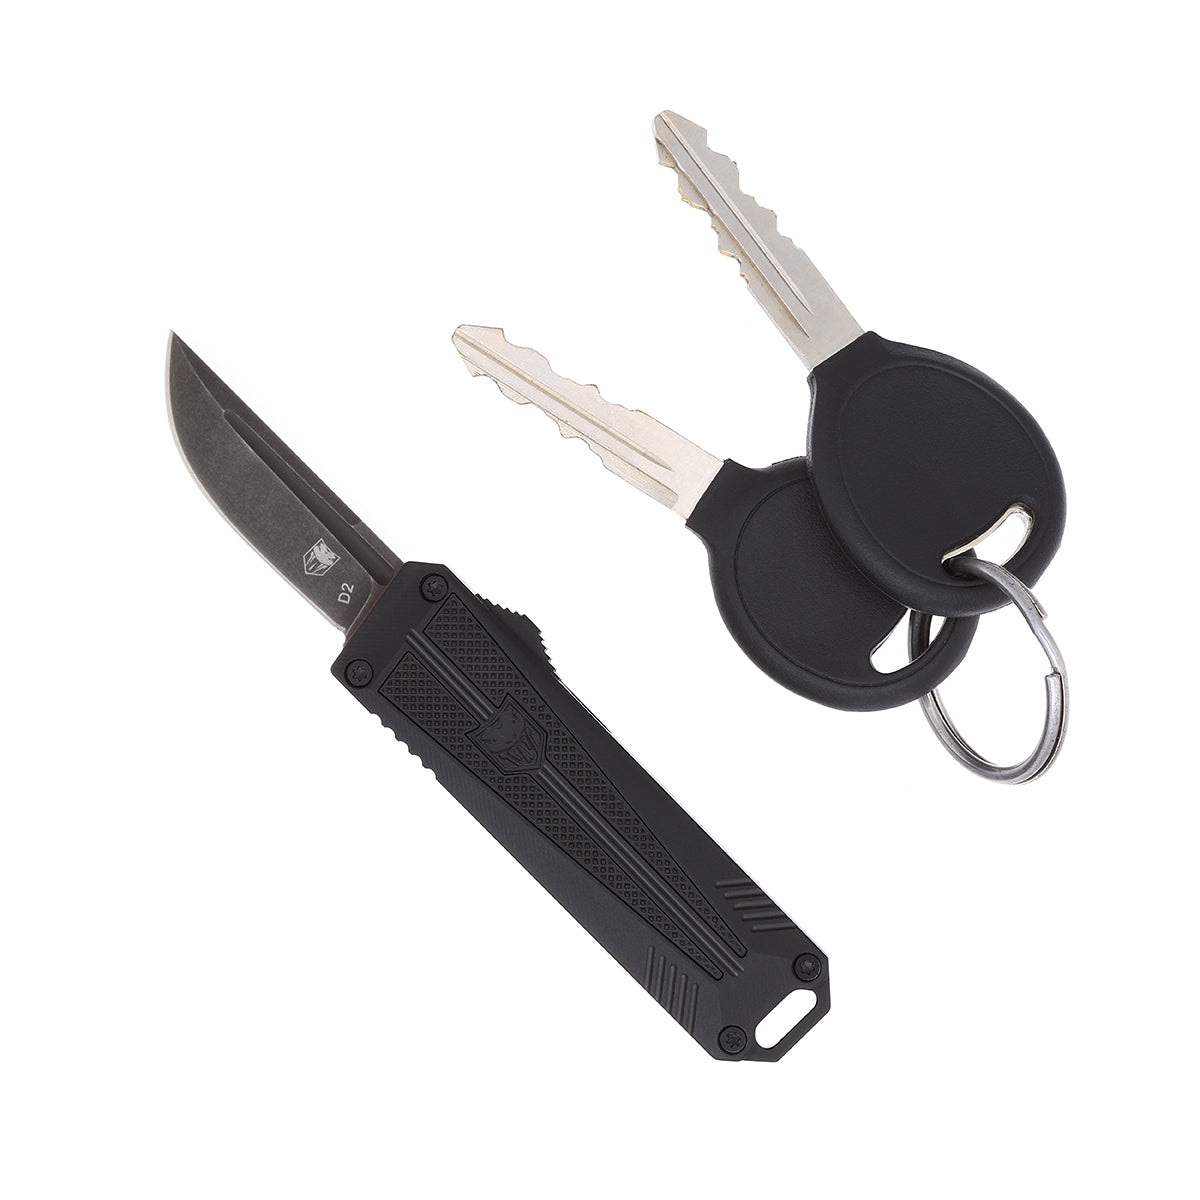 Couteau automatique medium fs-x black cobra tec - Roumaillac